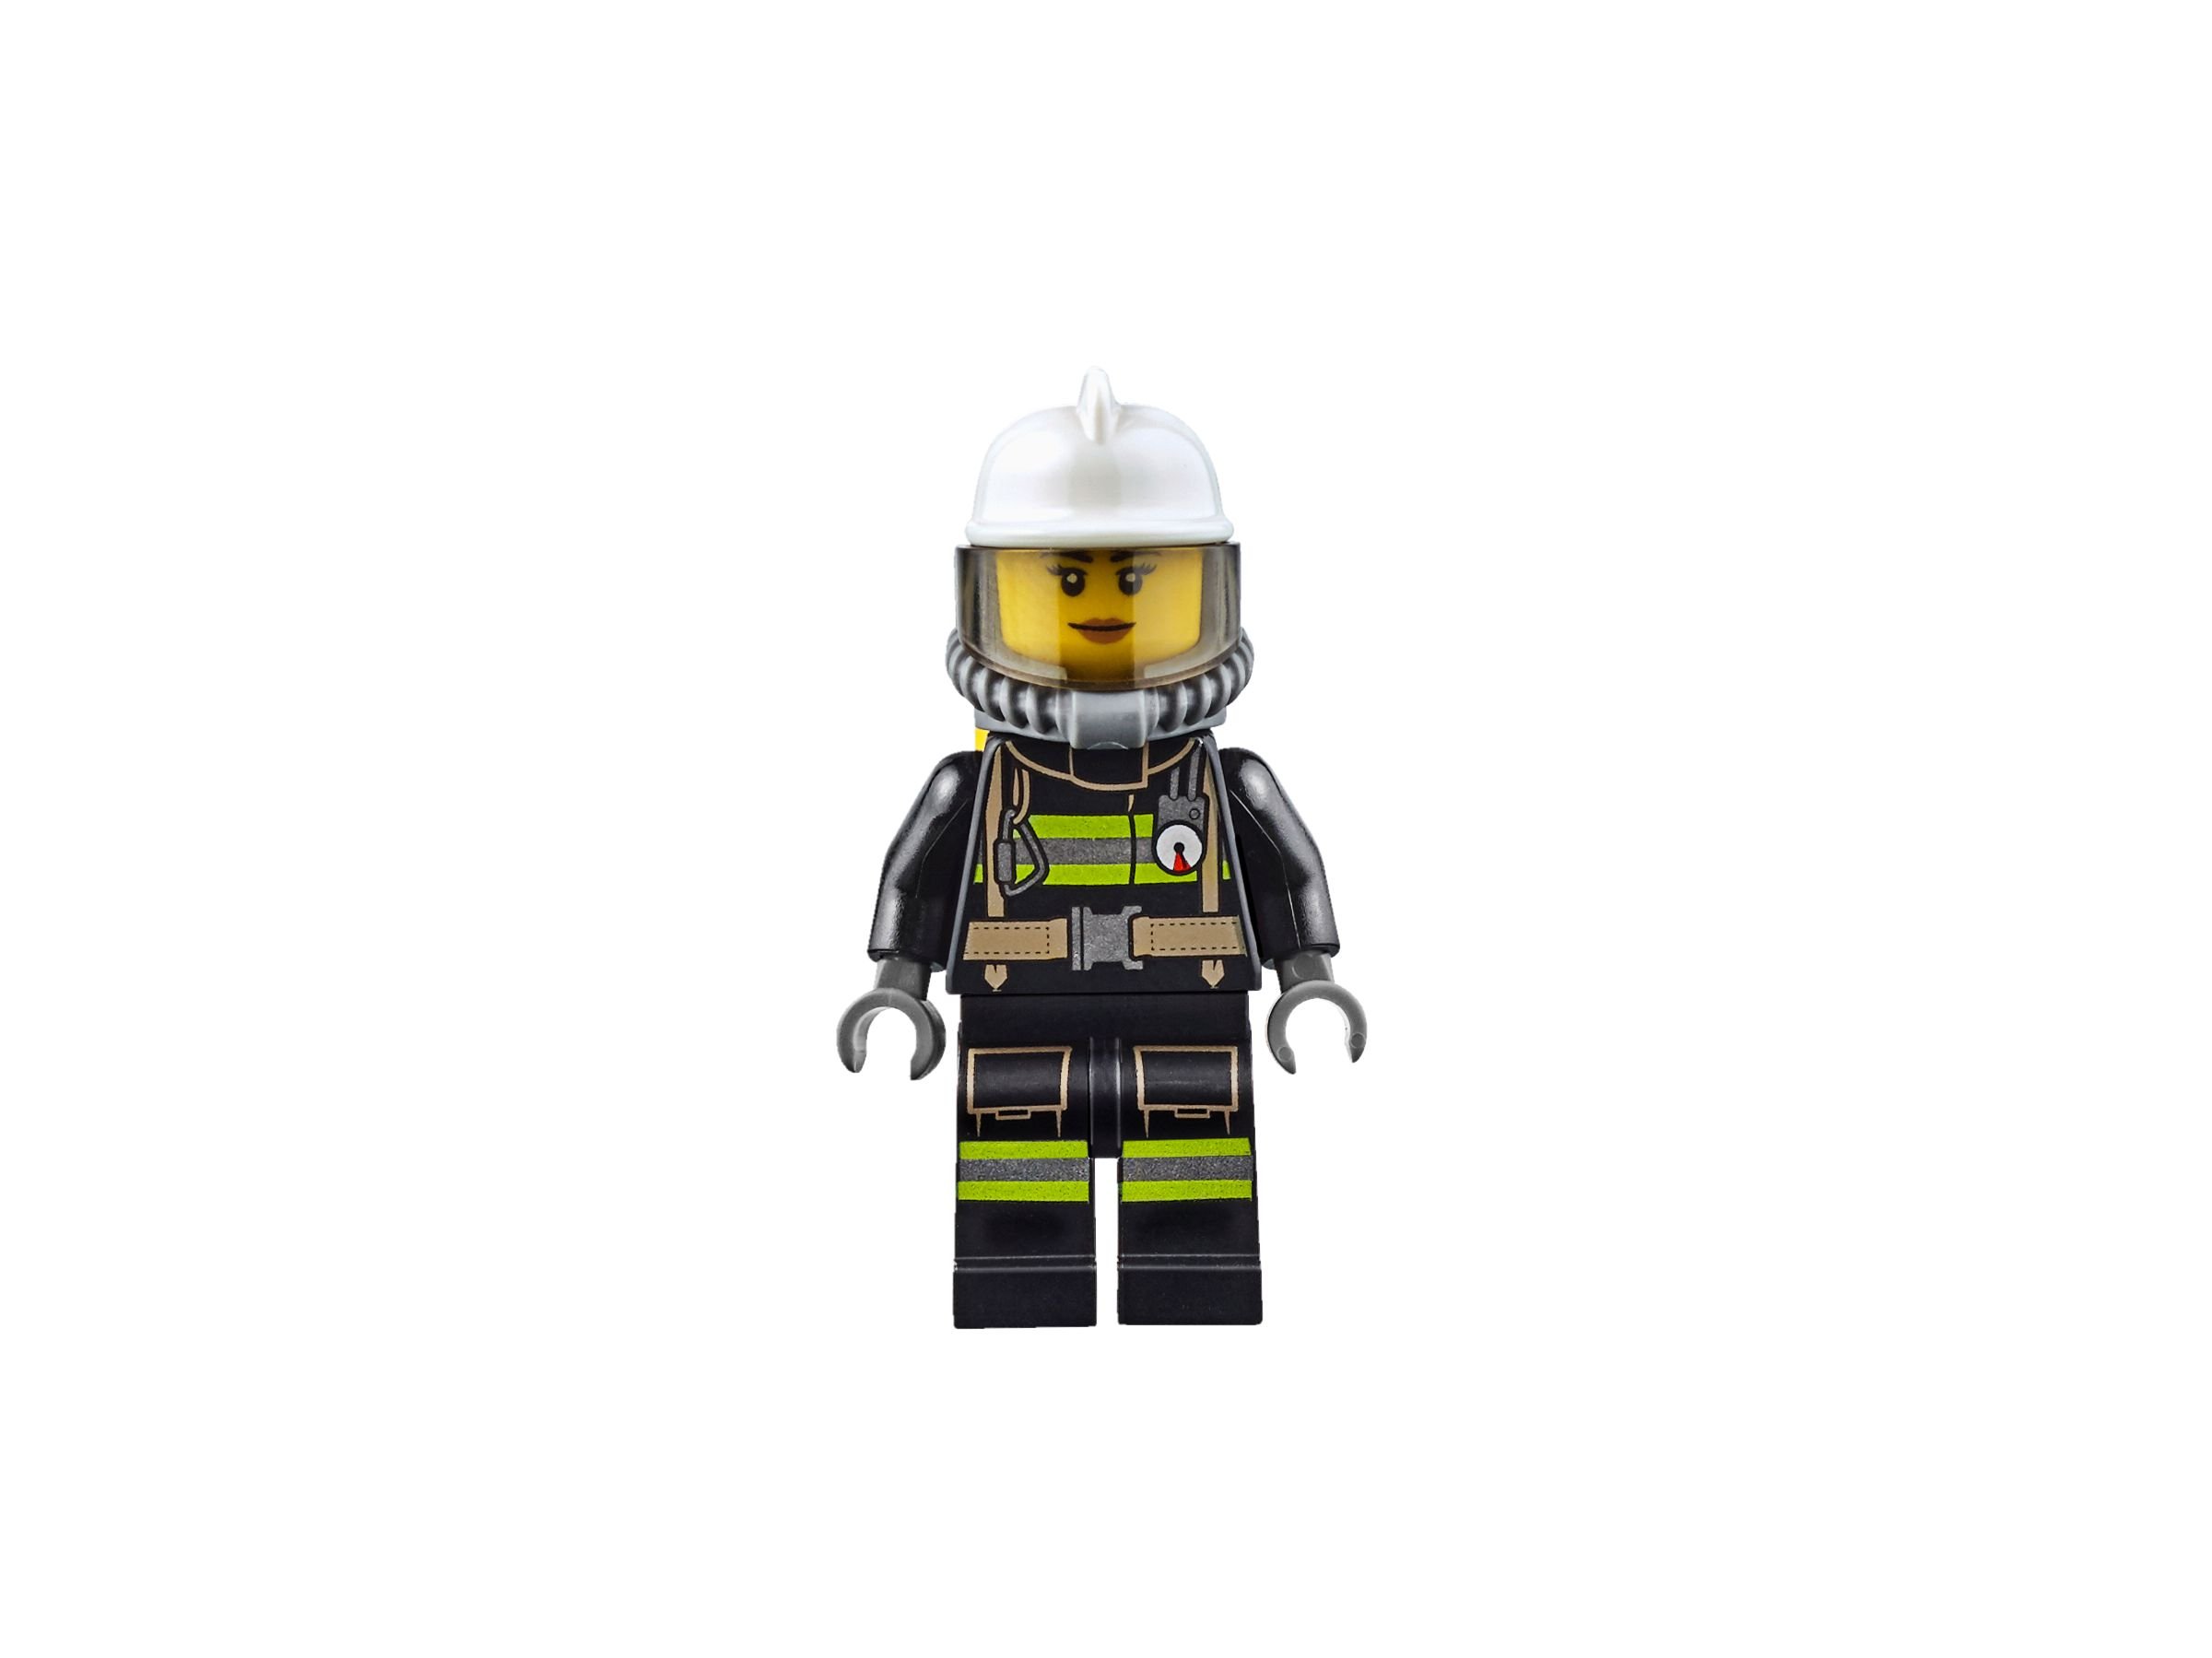 LEGO City 60110 Große Feuerwehrstation LEGO_60110_alt17.jpg